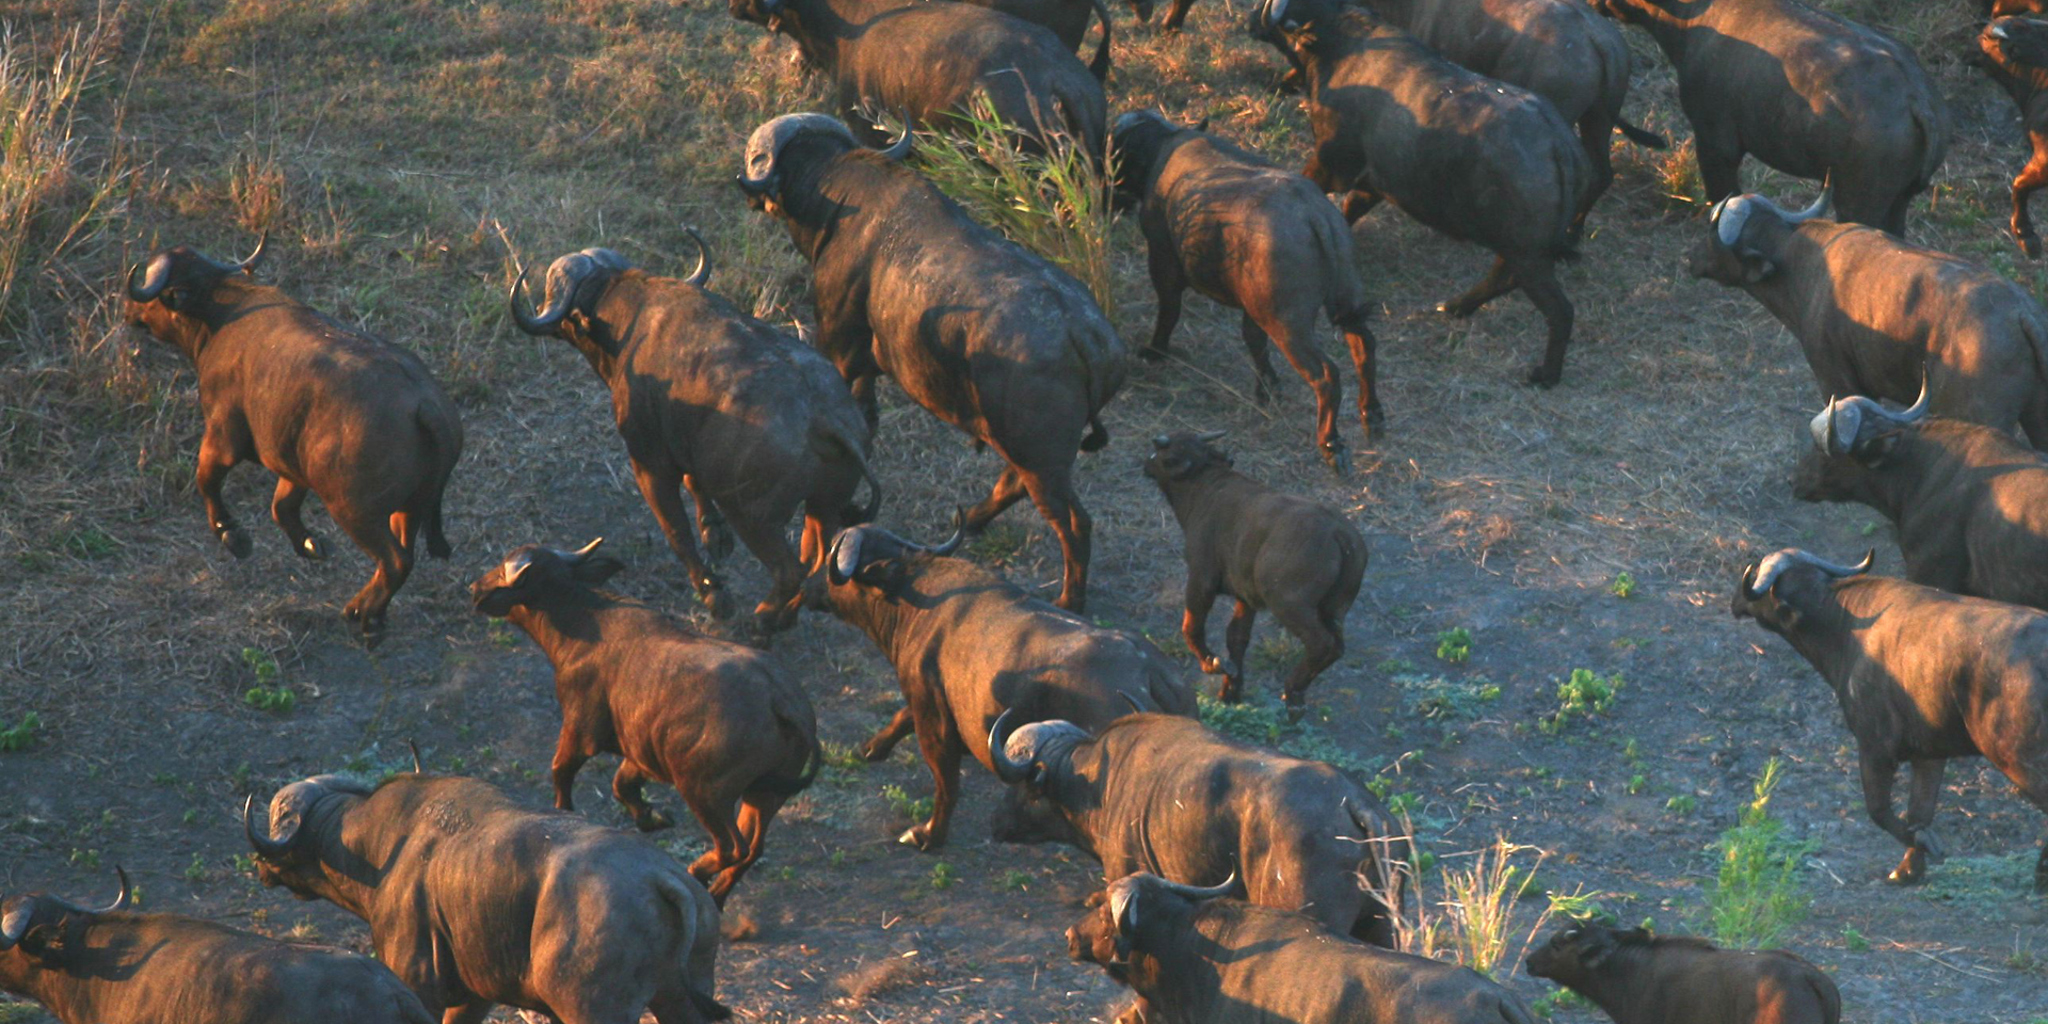 buffalo, wildlife in gorongosa, mozambique safari vacations